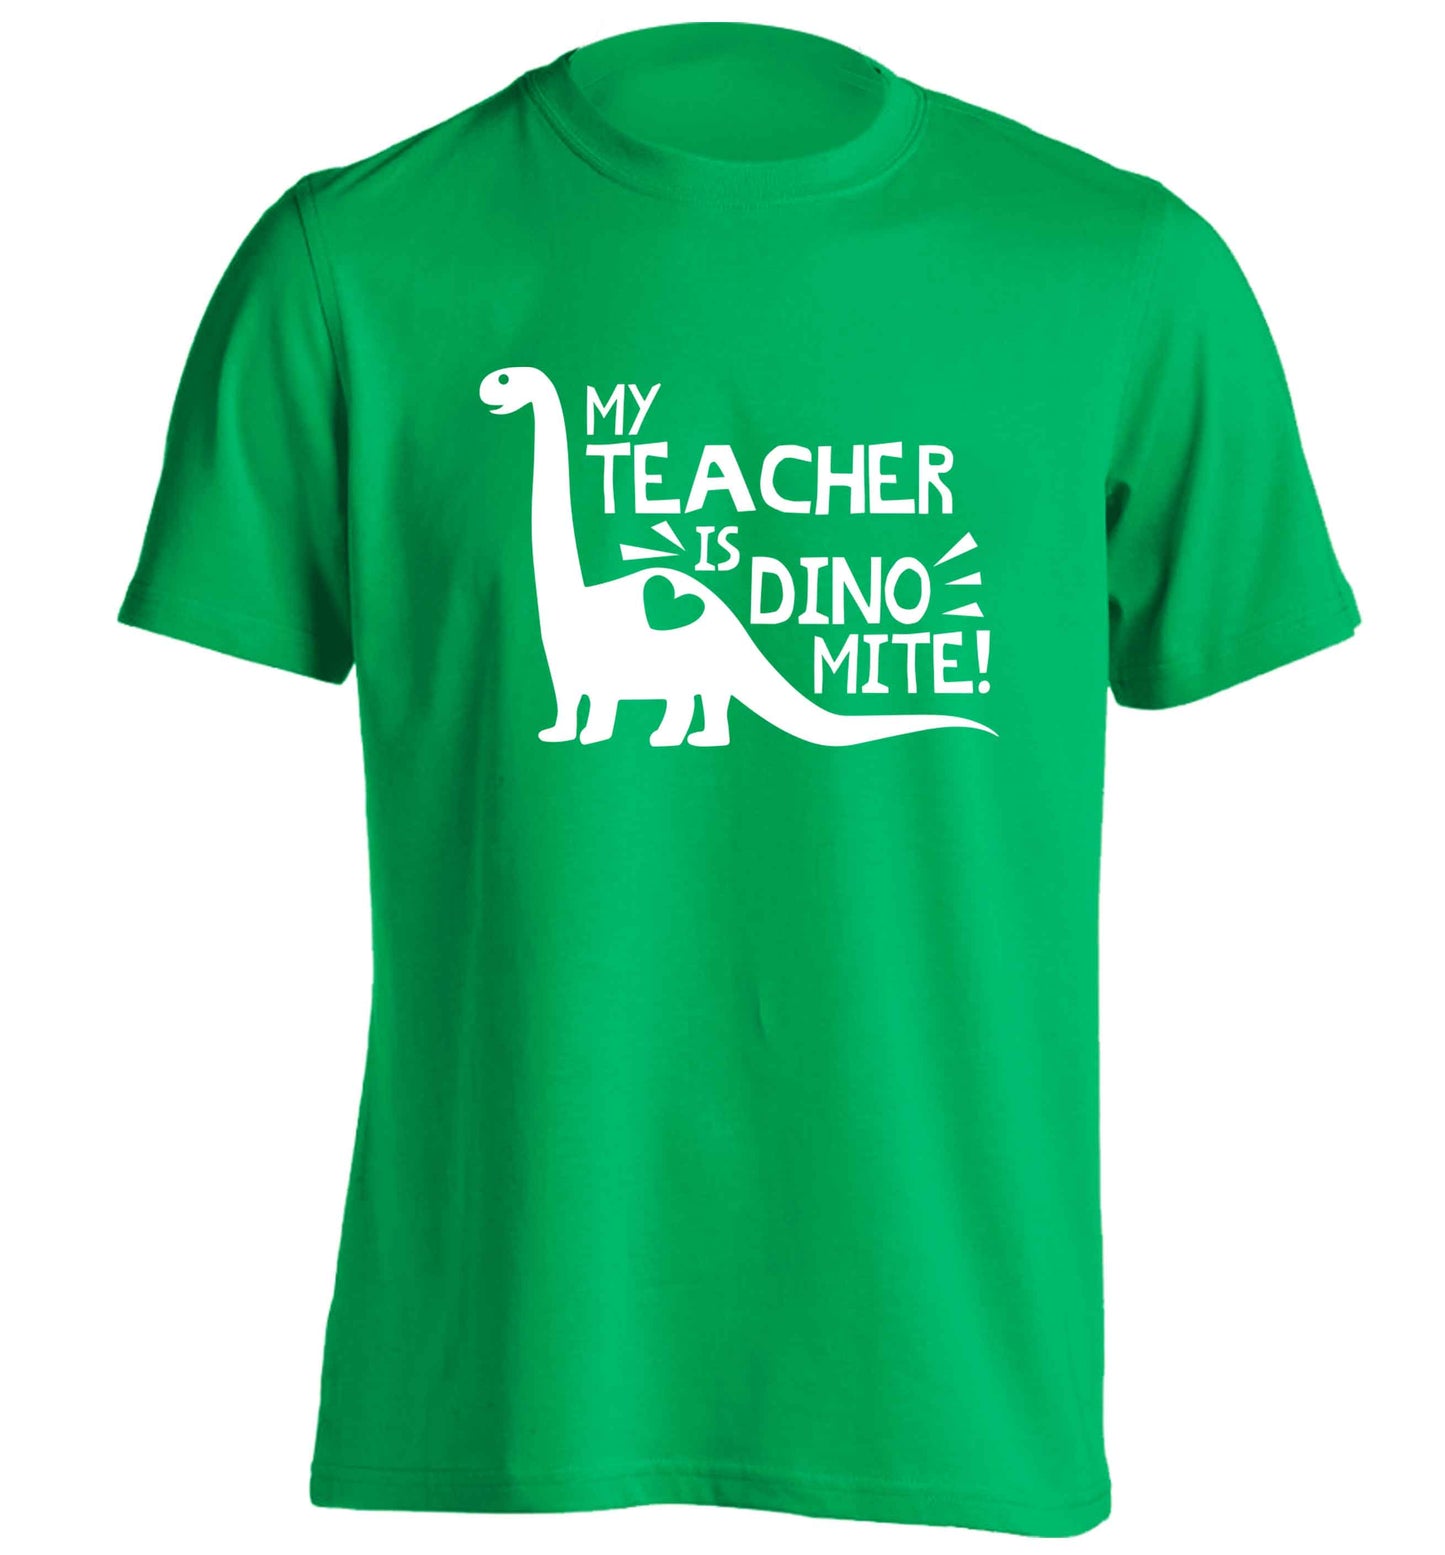 My teacher is dinomite! adults unisex green Tshirt 2XL